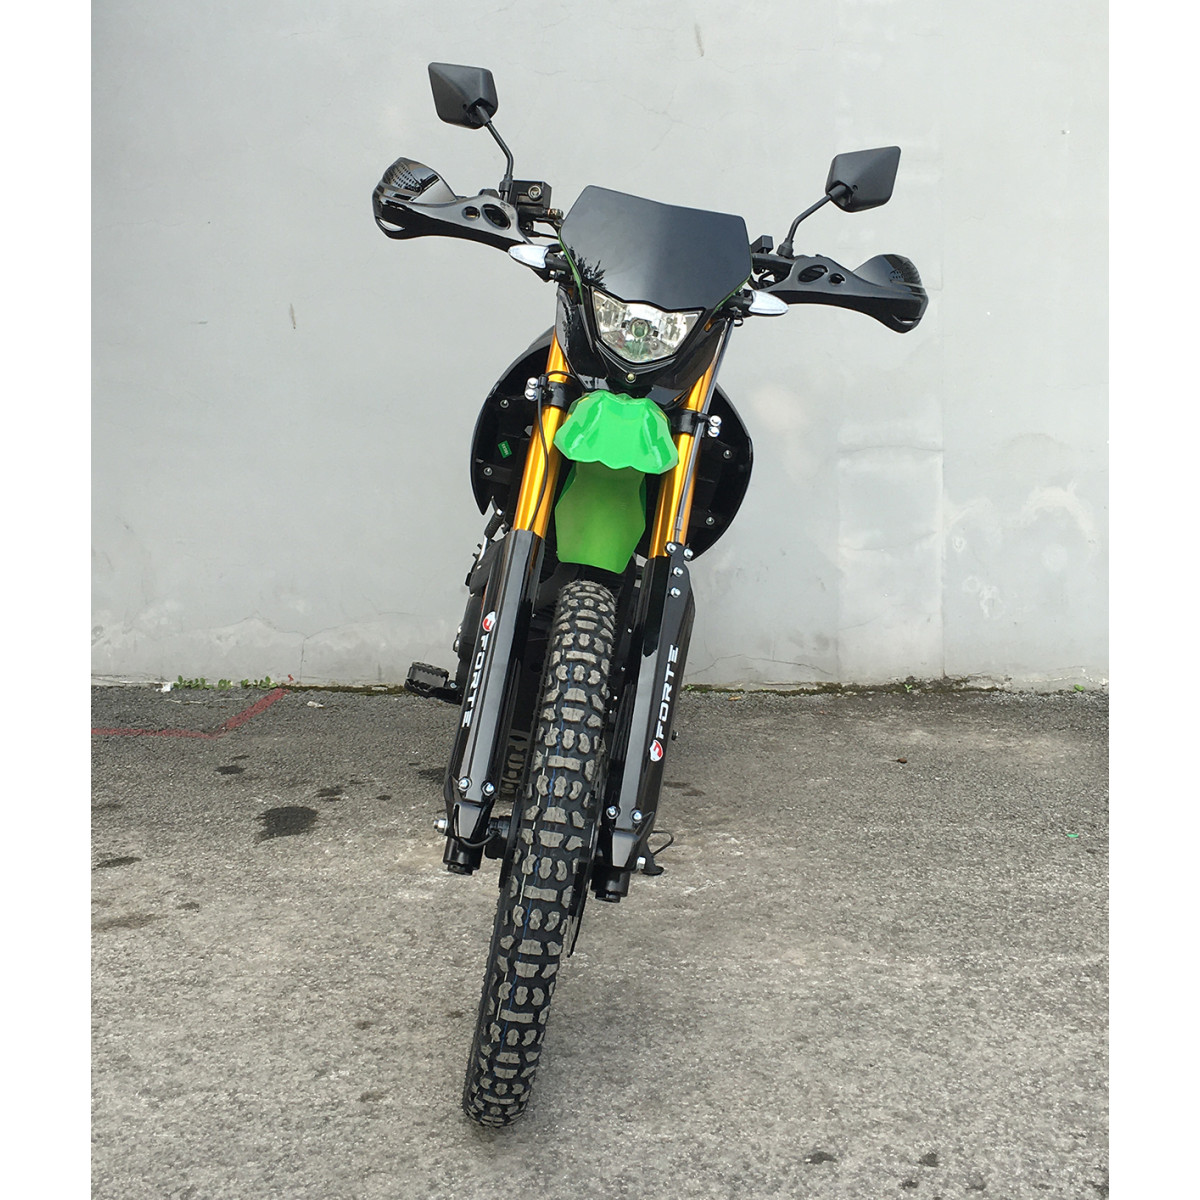 Мотоцикл FT250GY-CBA Forte зелено-черный